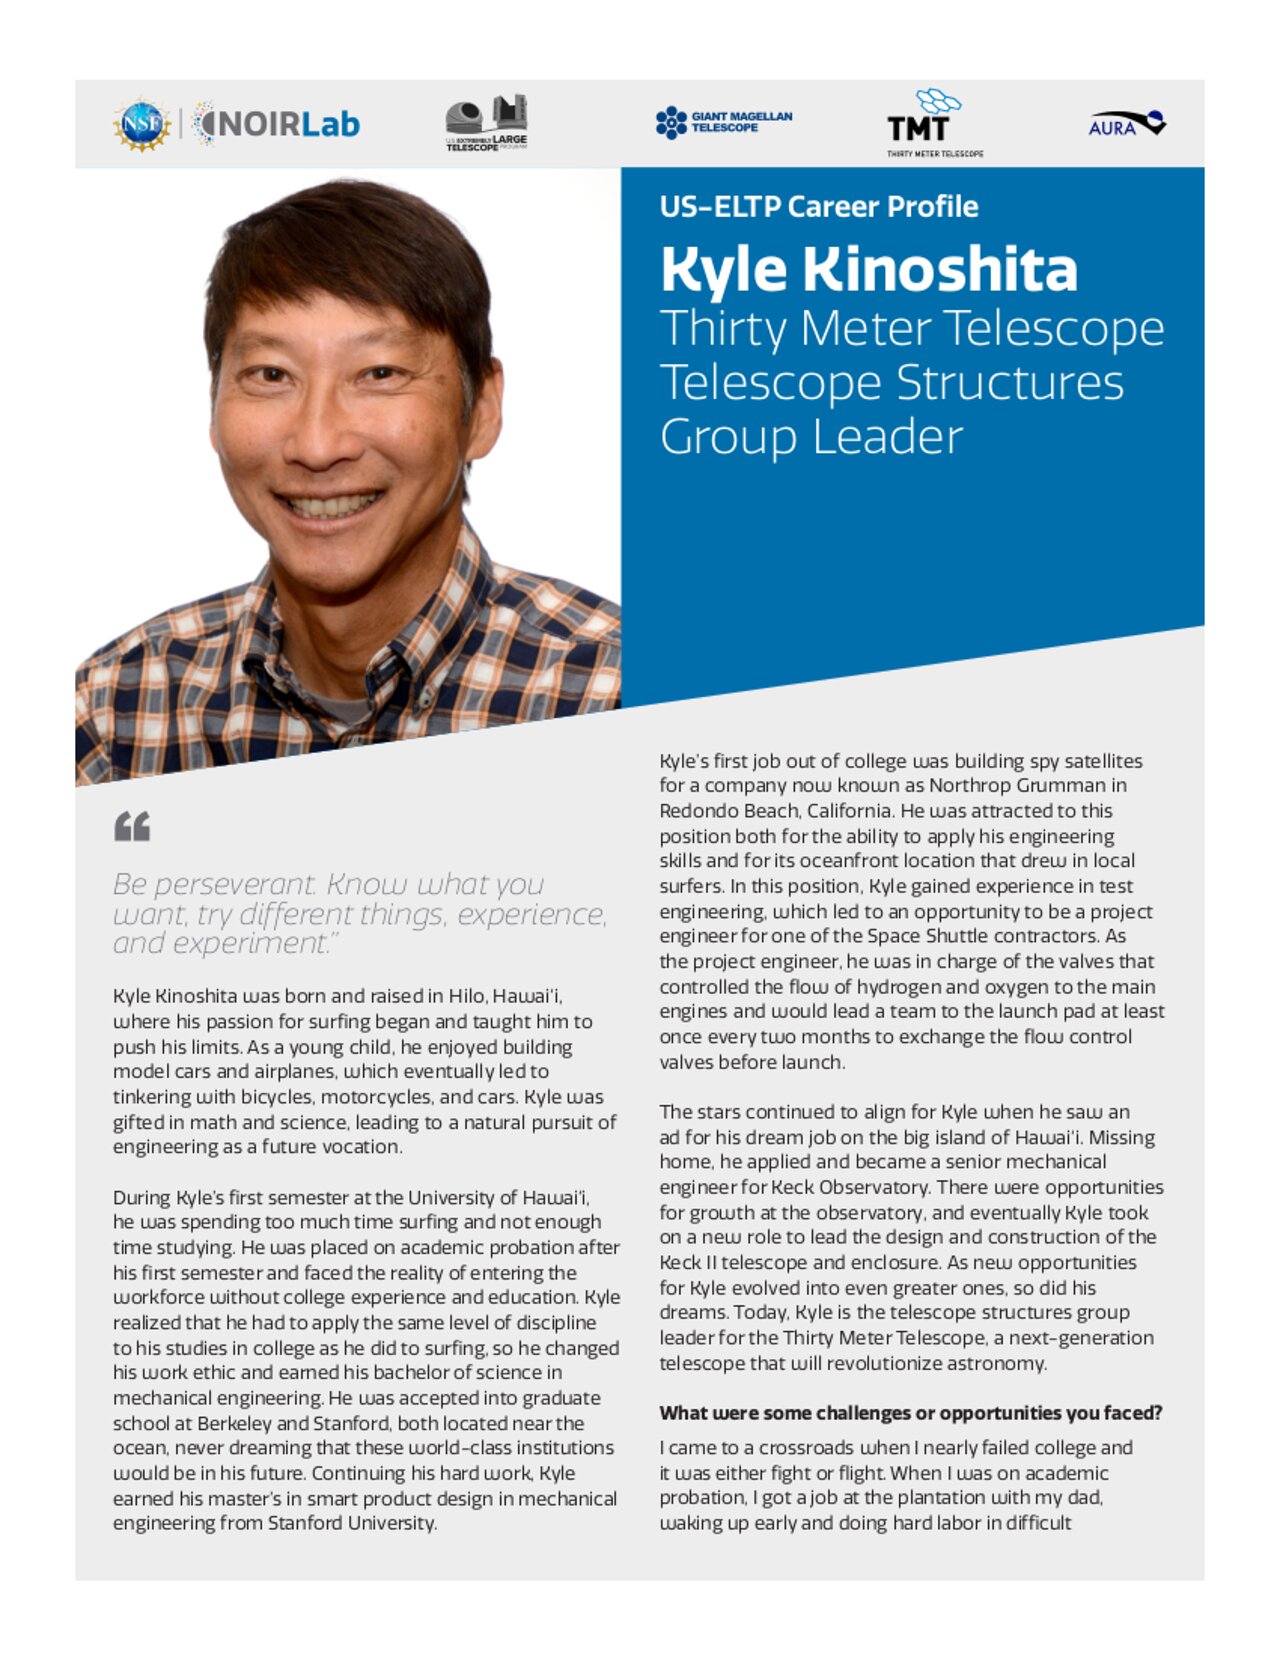 Handouts: US-ELTP Career Profile — Kyle Kinoshita